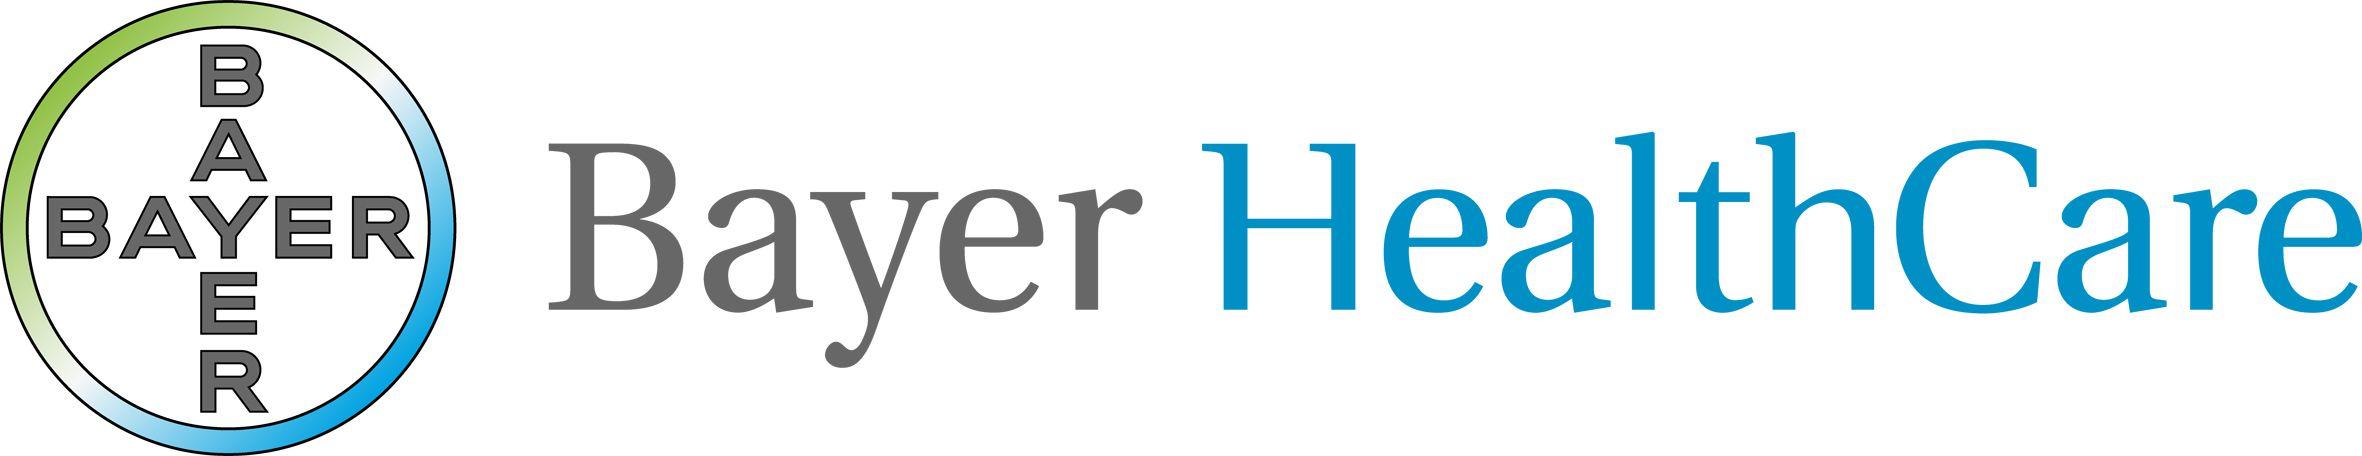 Bayer Corporation Logo - Bayer HealthCare | CEO Cancer Gold Standard